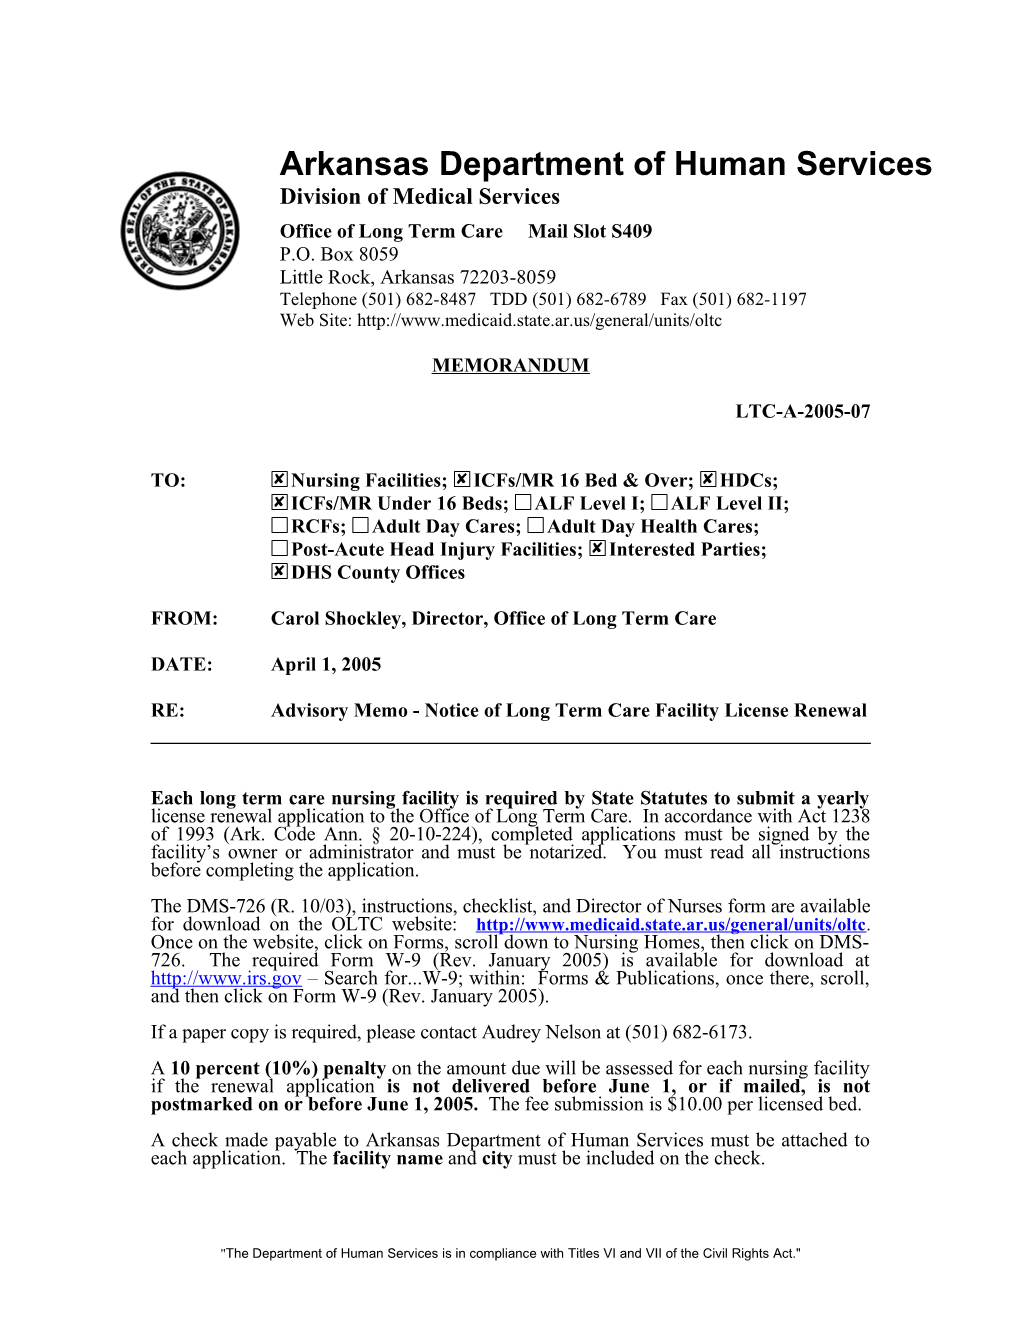 Nursing Homes and Icfs/MR Licensure Renewal Notice